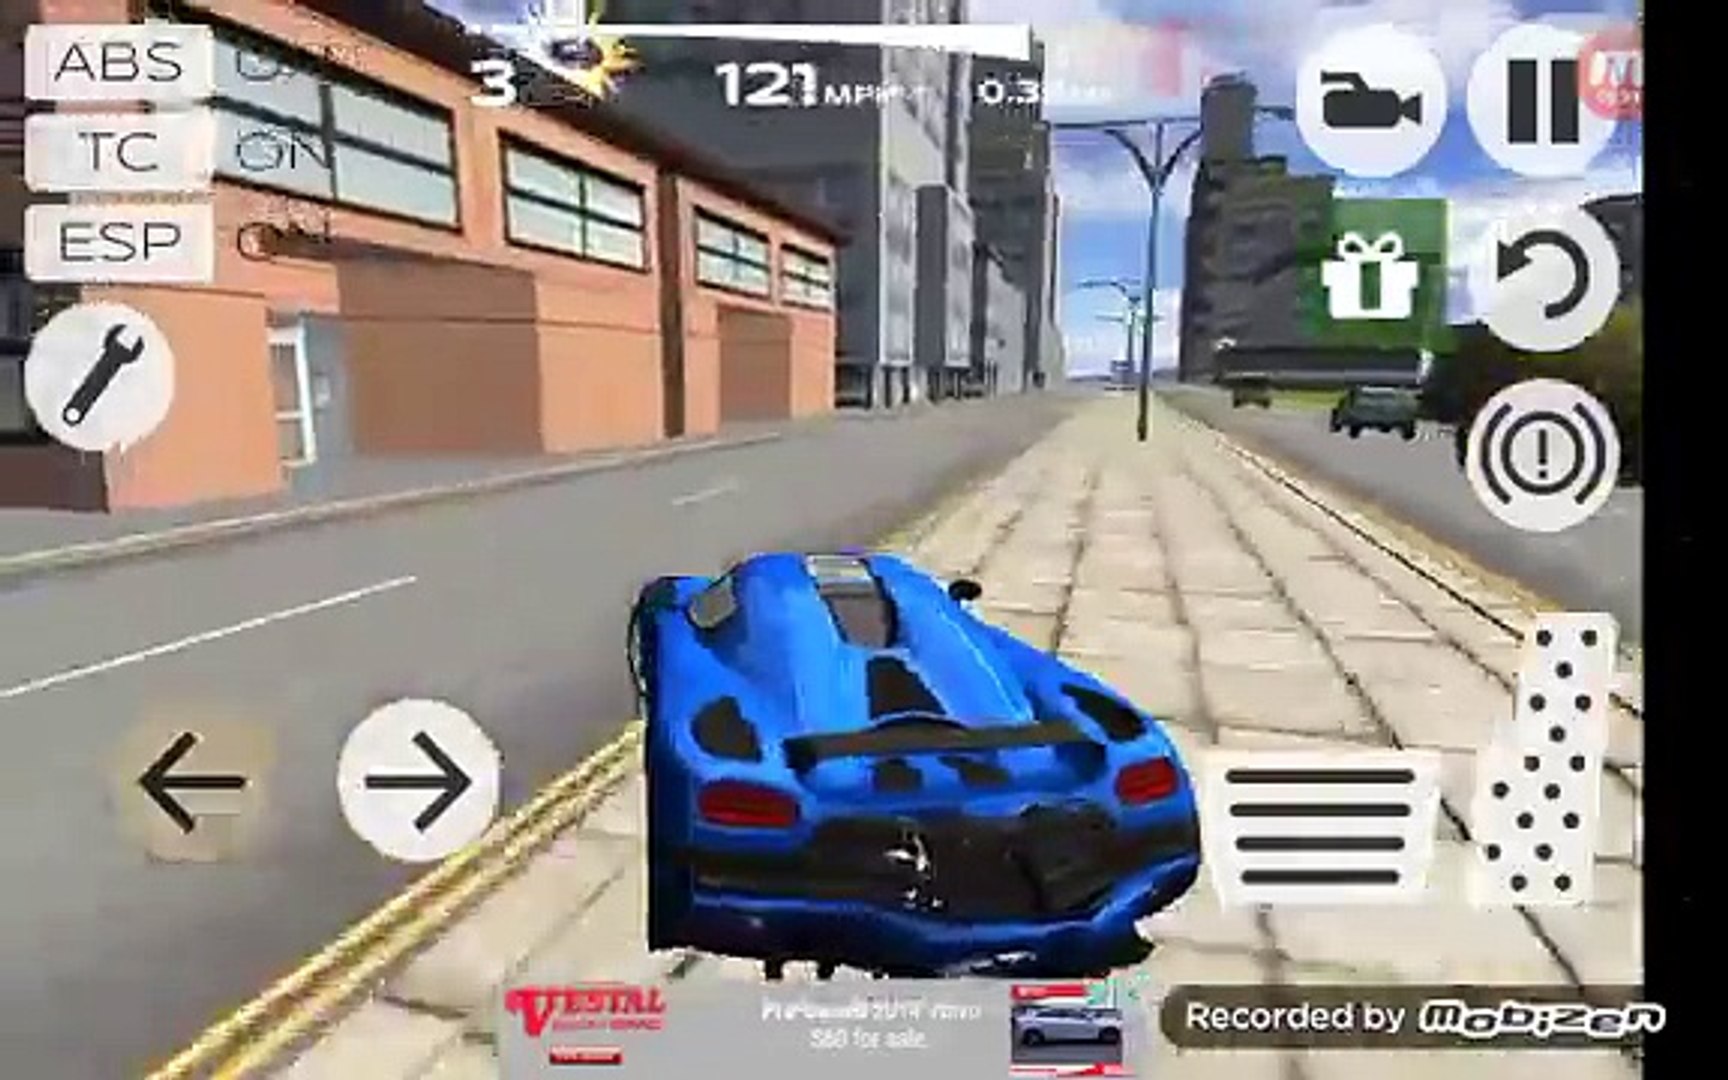 Extreme car driving simulator